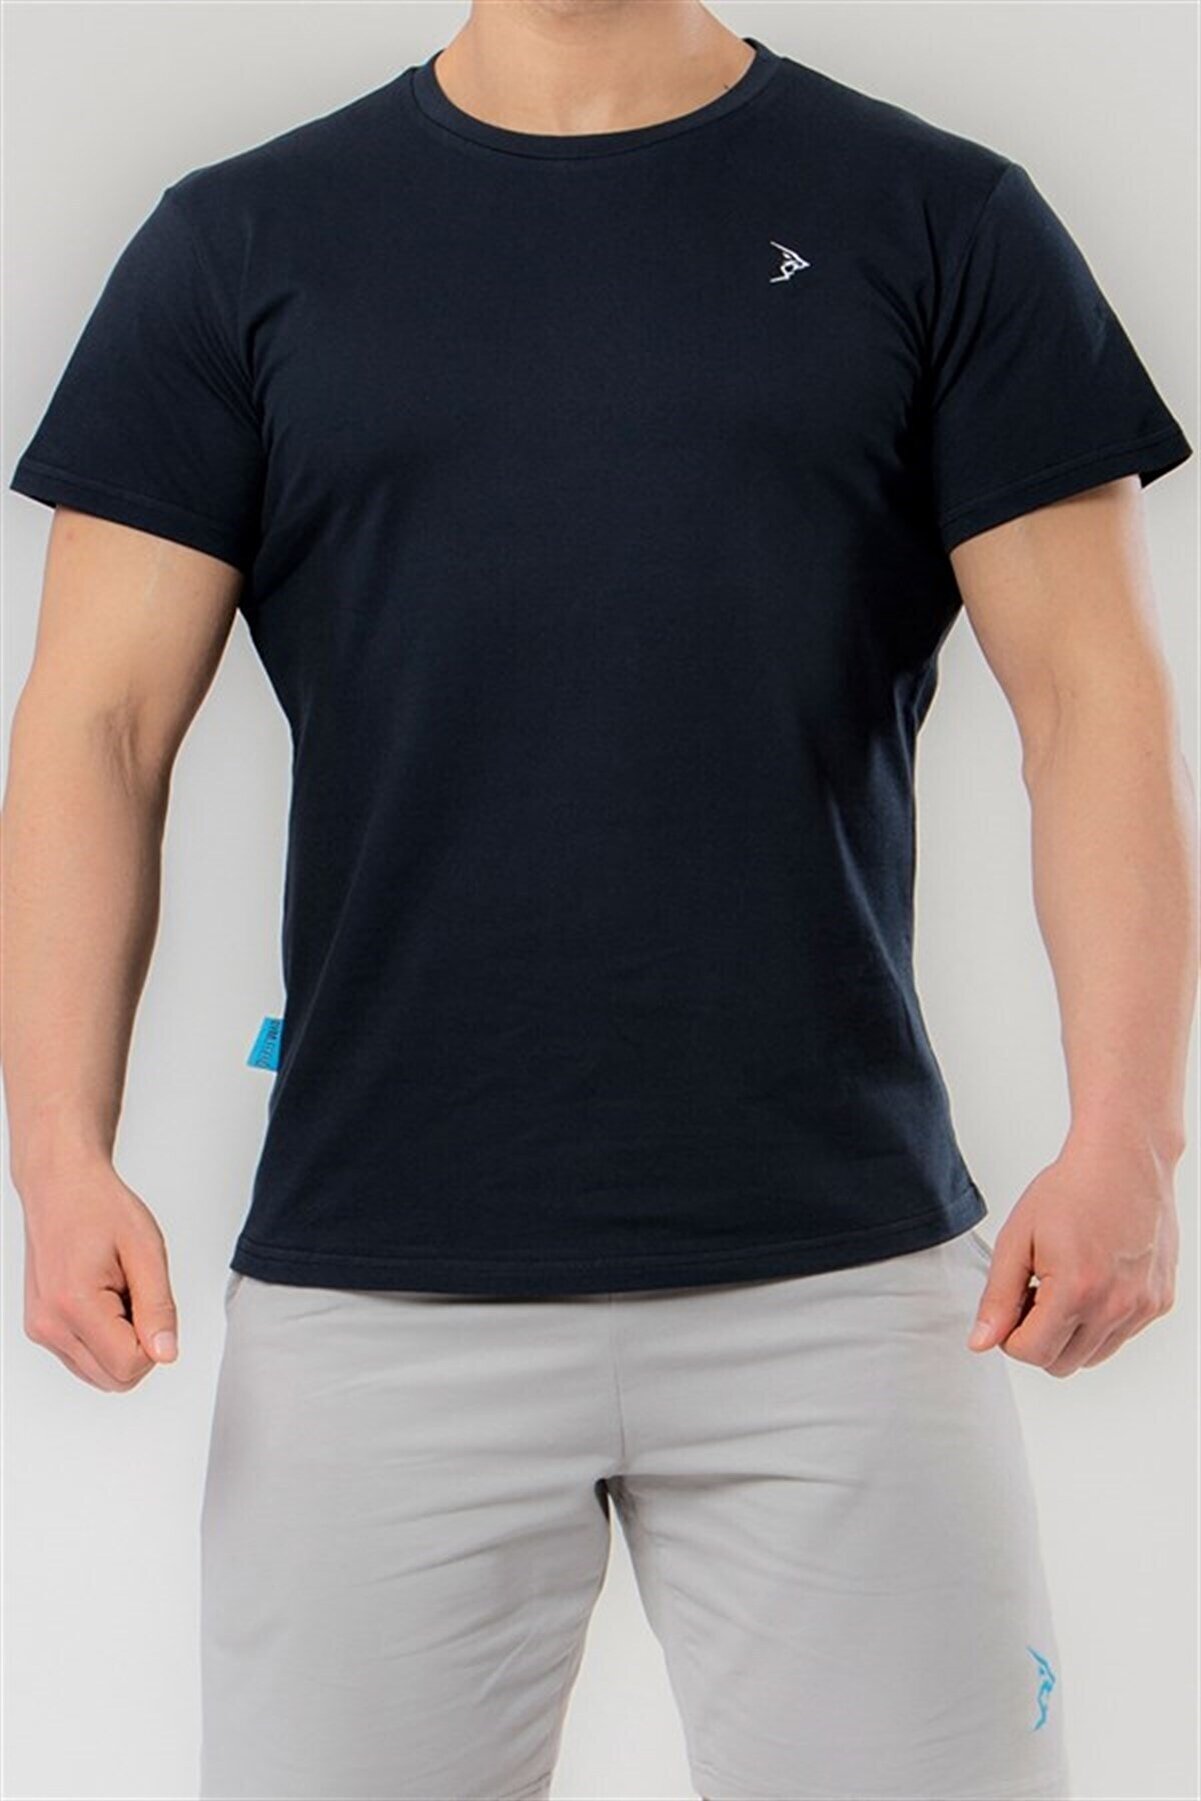 Gymlegend Erkek Koyu Lacivert Pike Kısa Kollu Basic Tişört